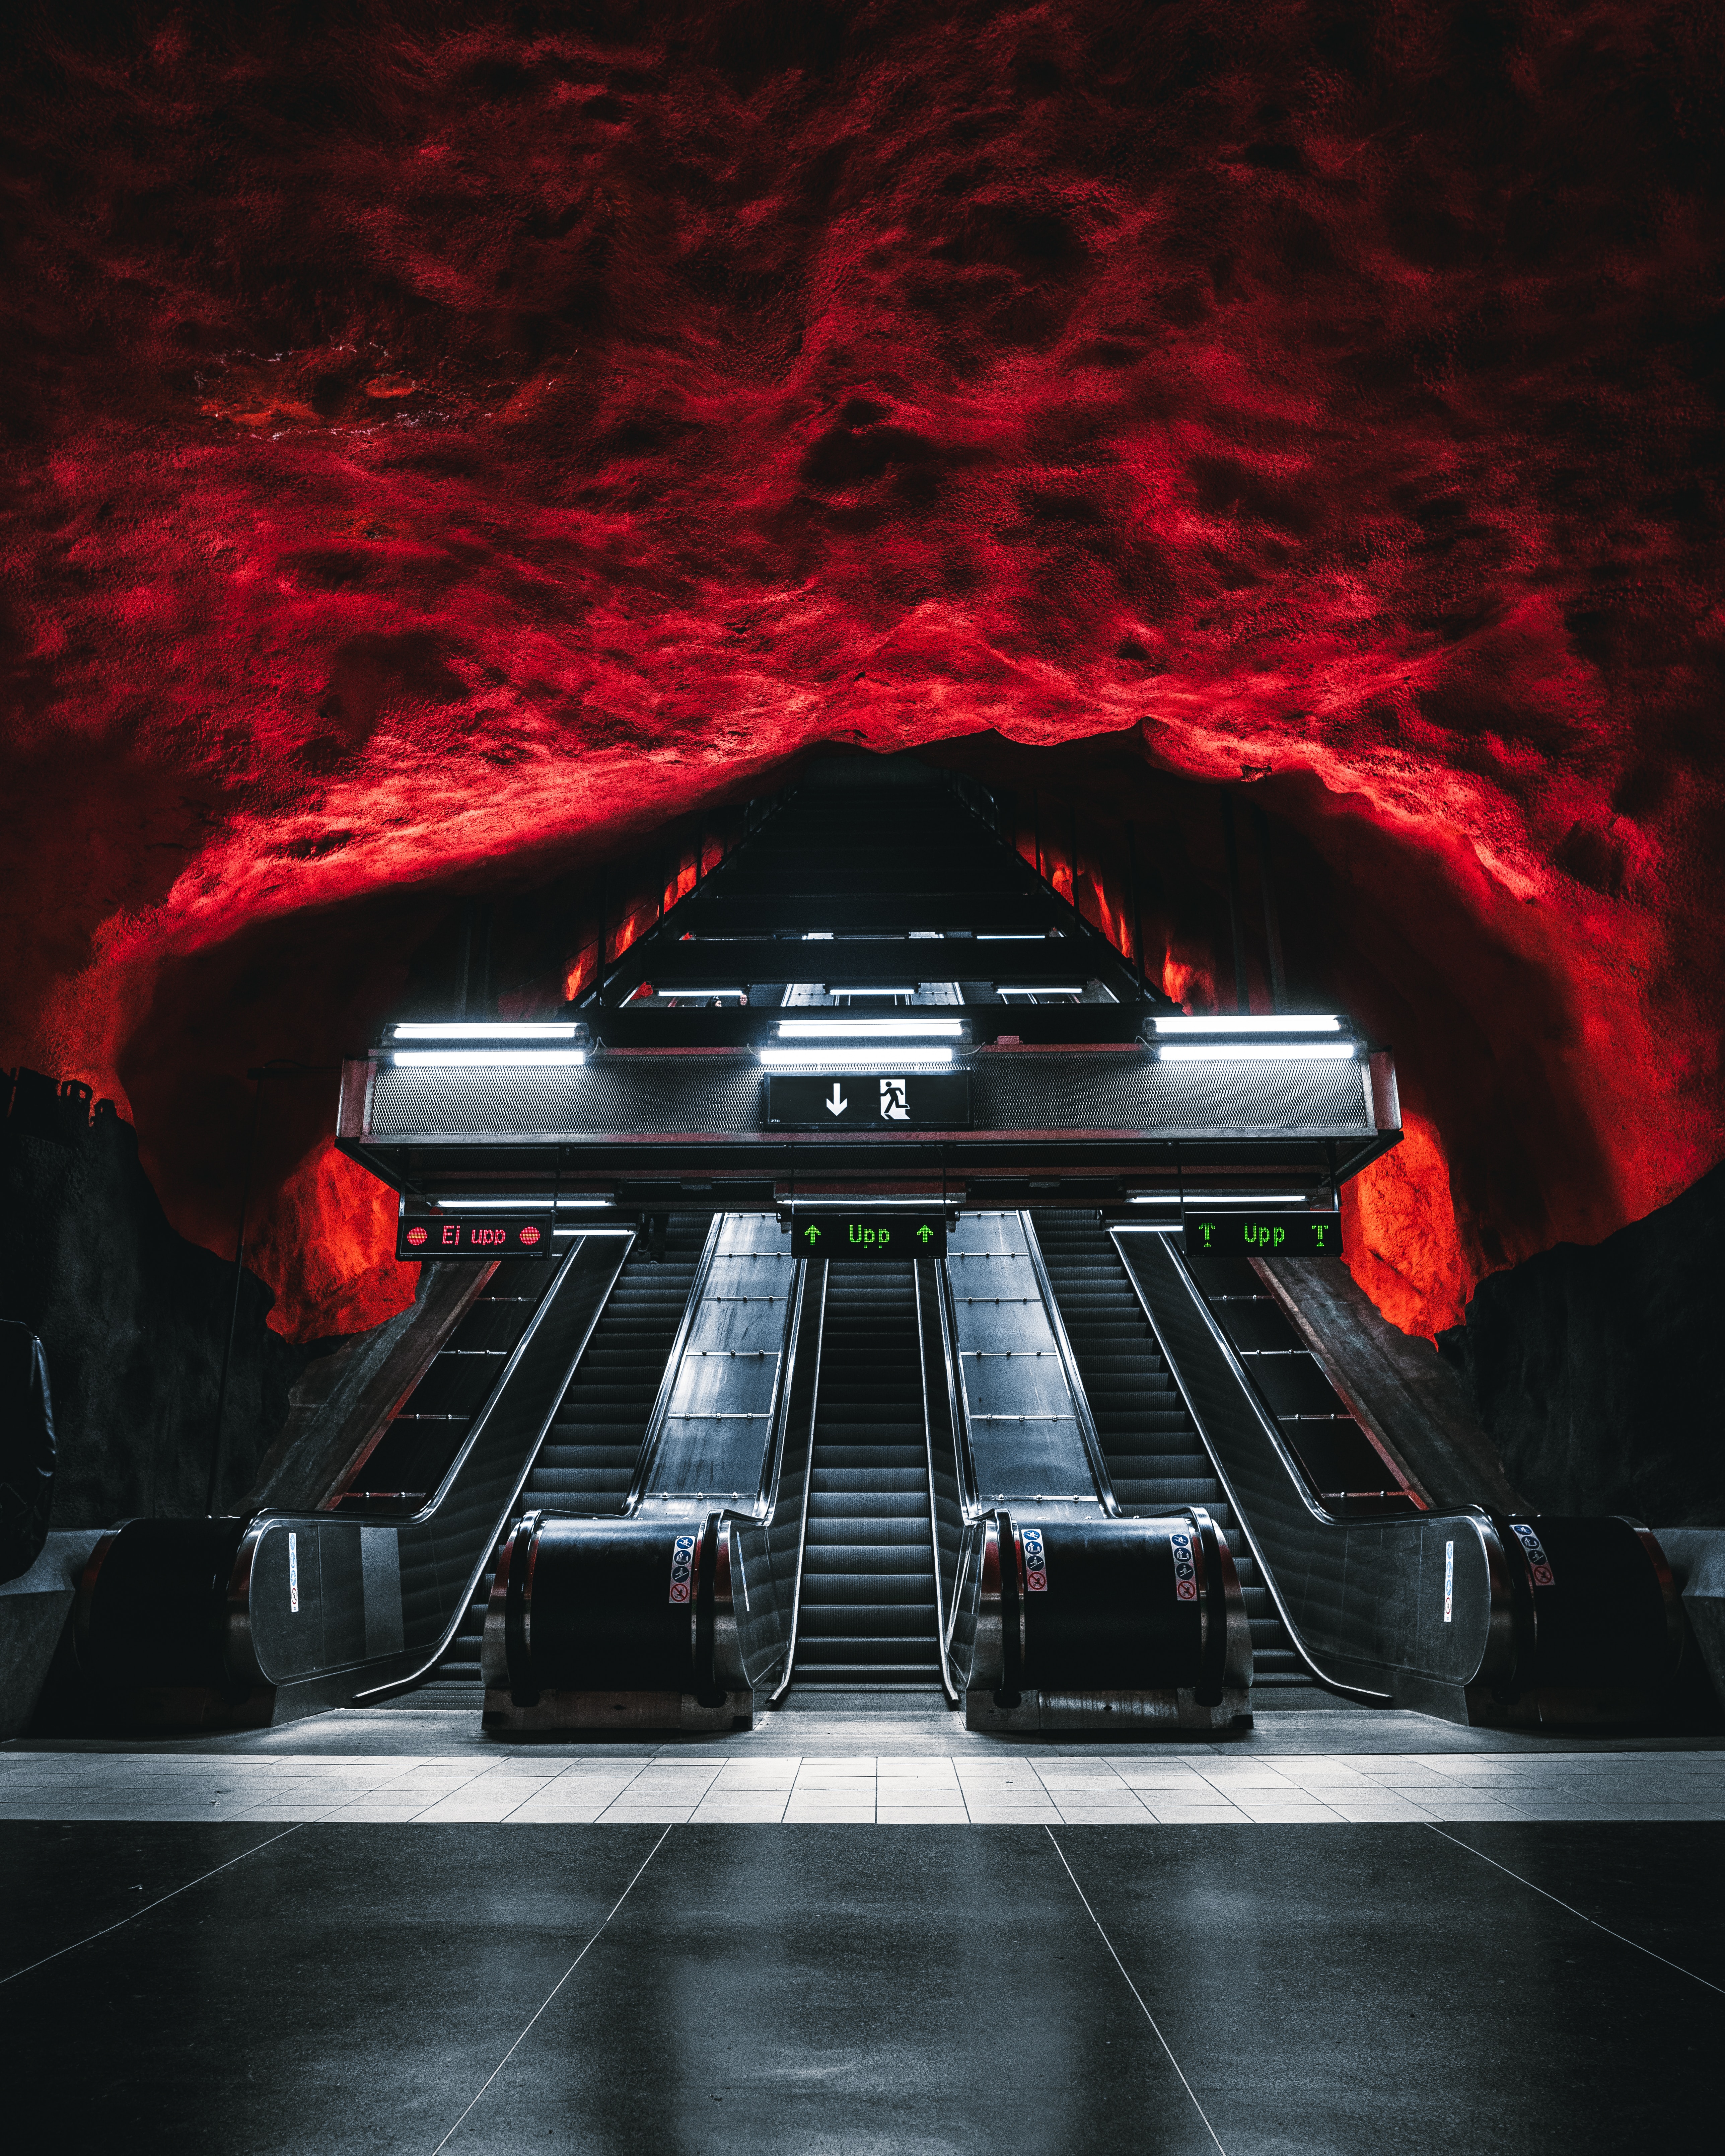 dark, subway, miscellanea, miscellaneous, tunnel, underground, metro, escalator